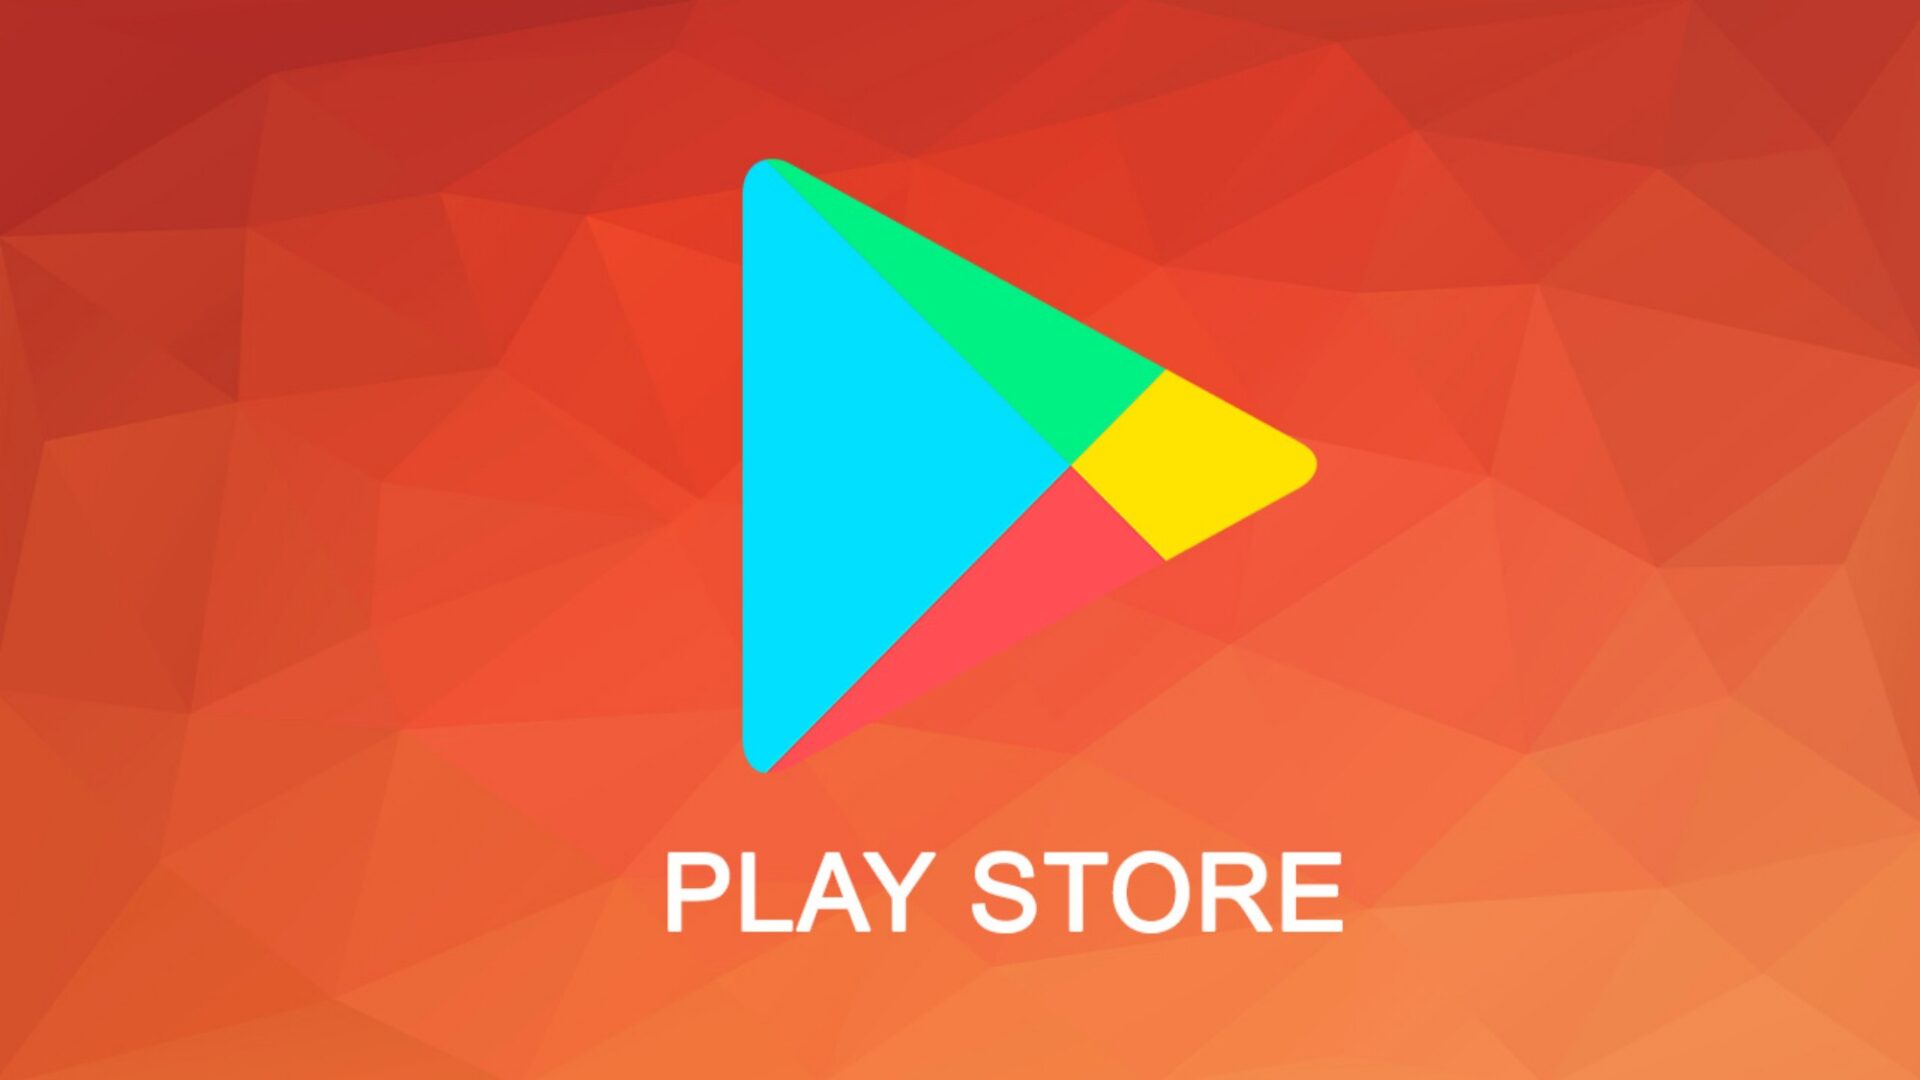 Play store indir. Play Store. Google Play. Гугота плей. Google Play Store.